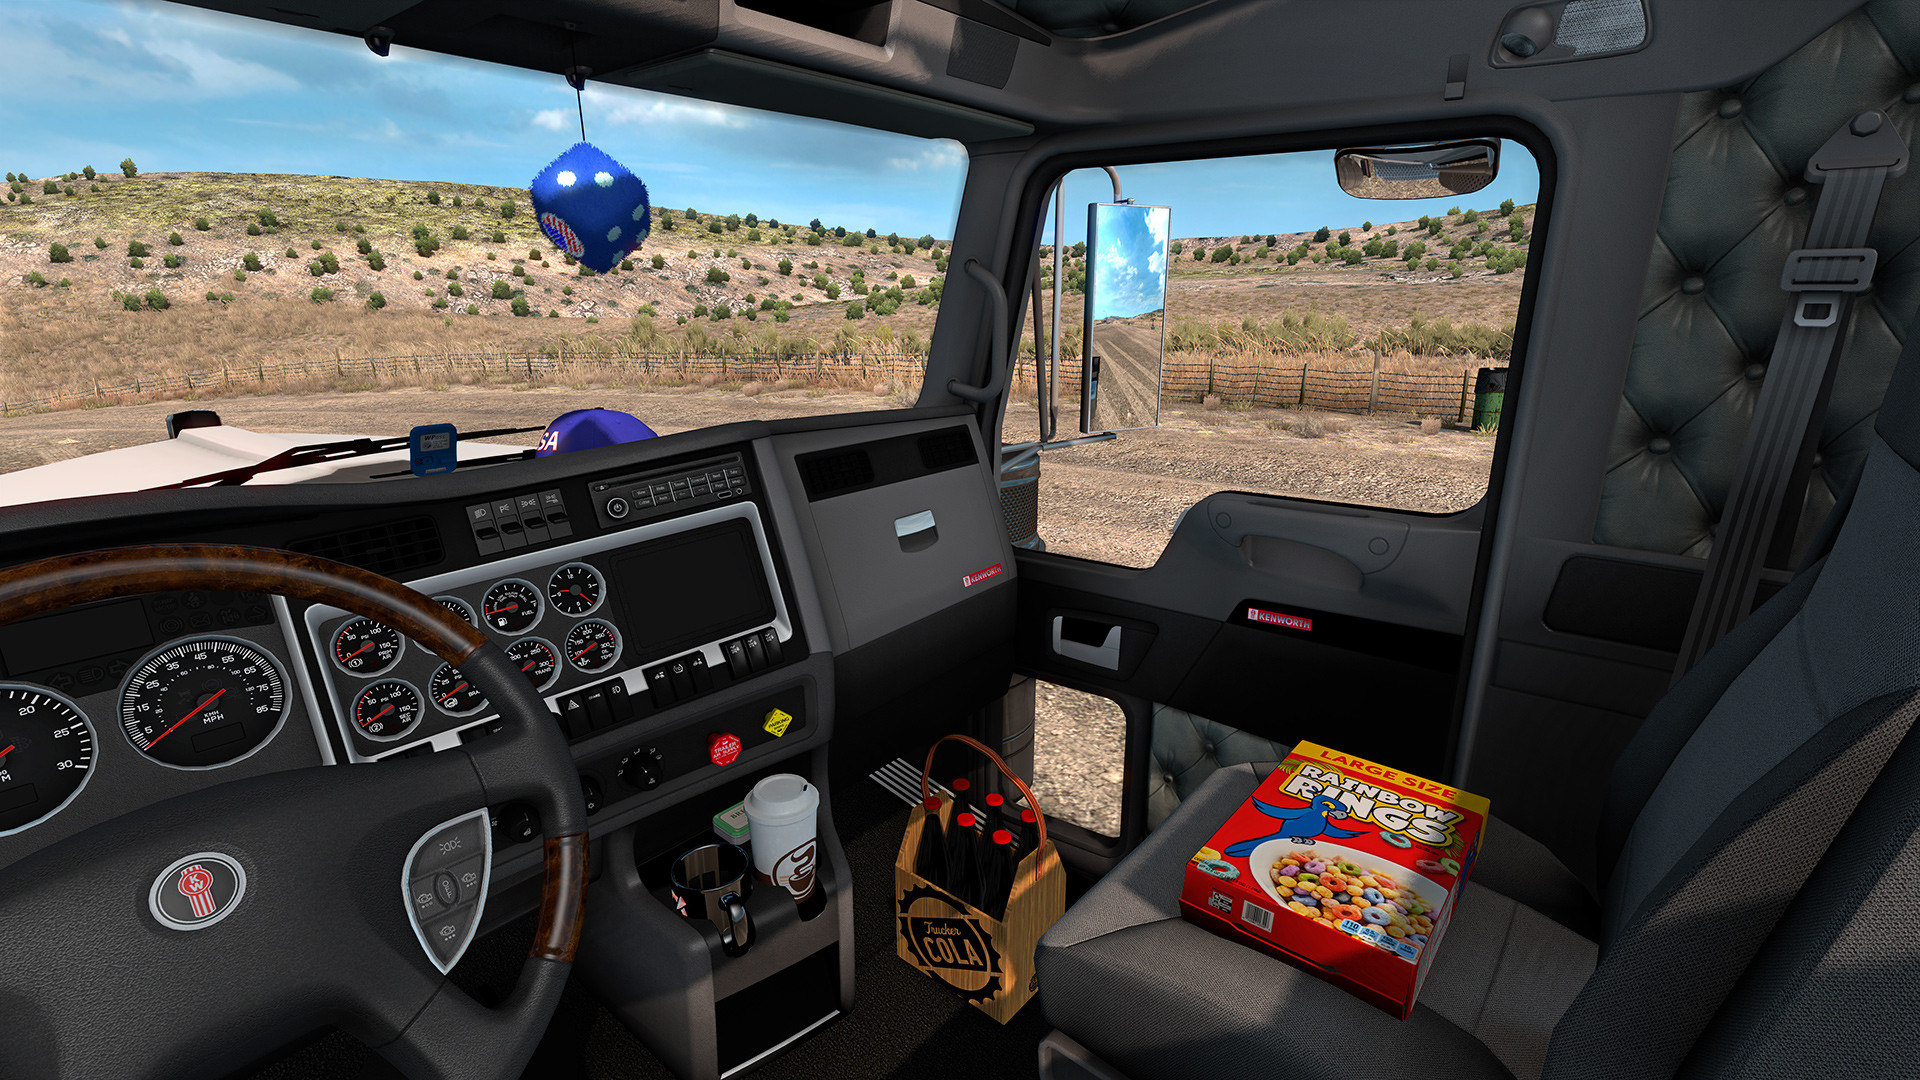 Truck Interior Accessories